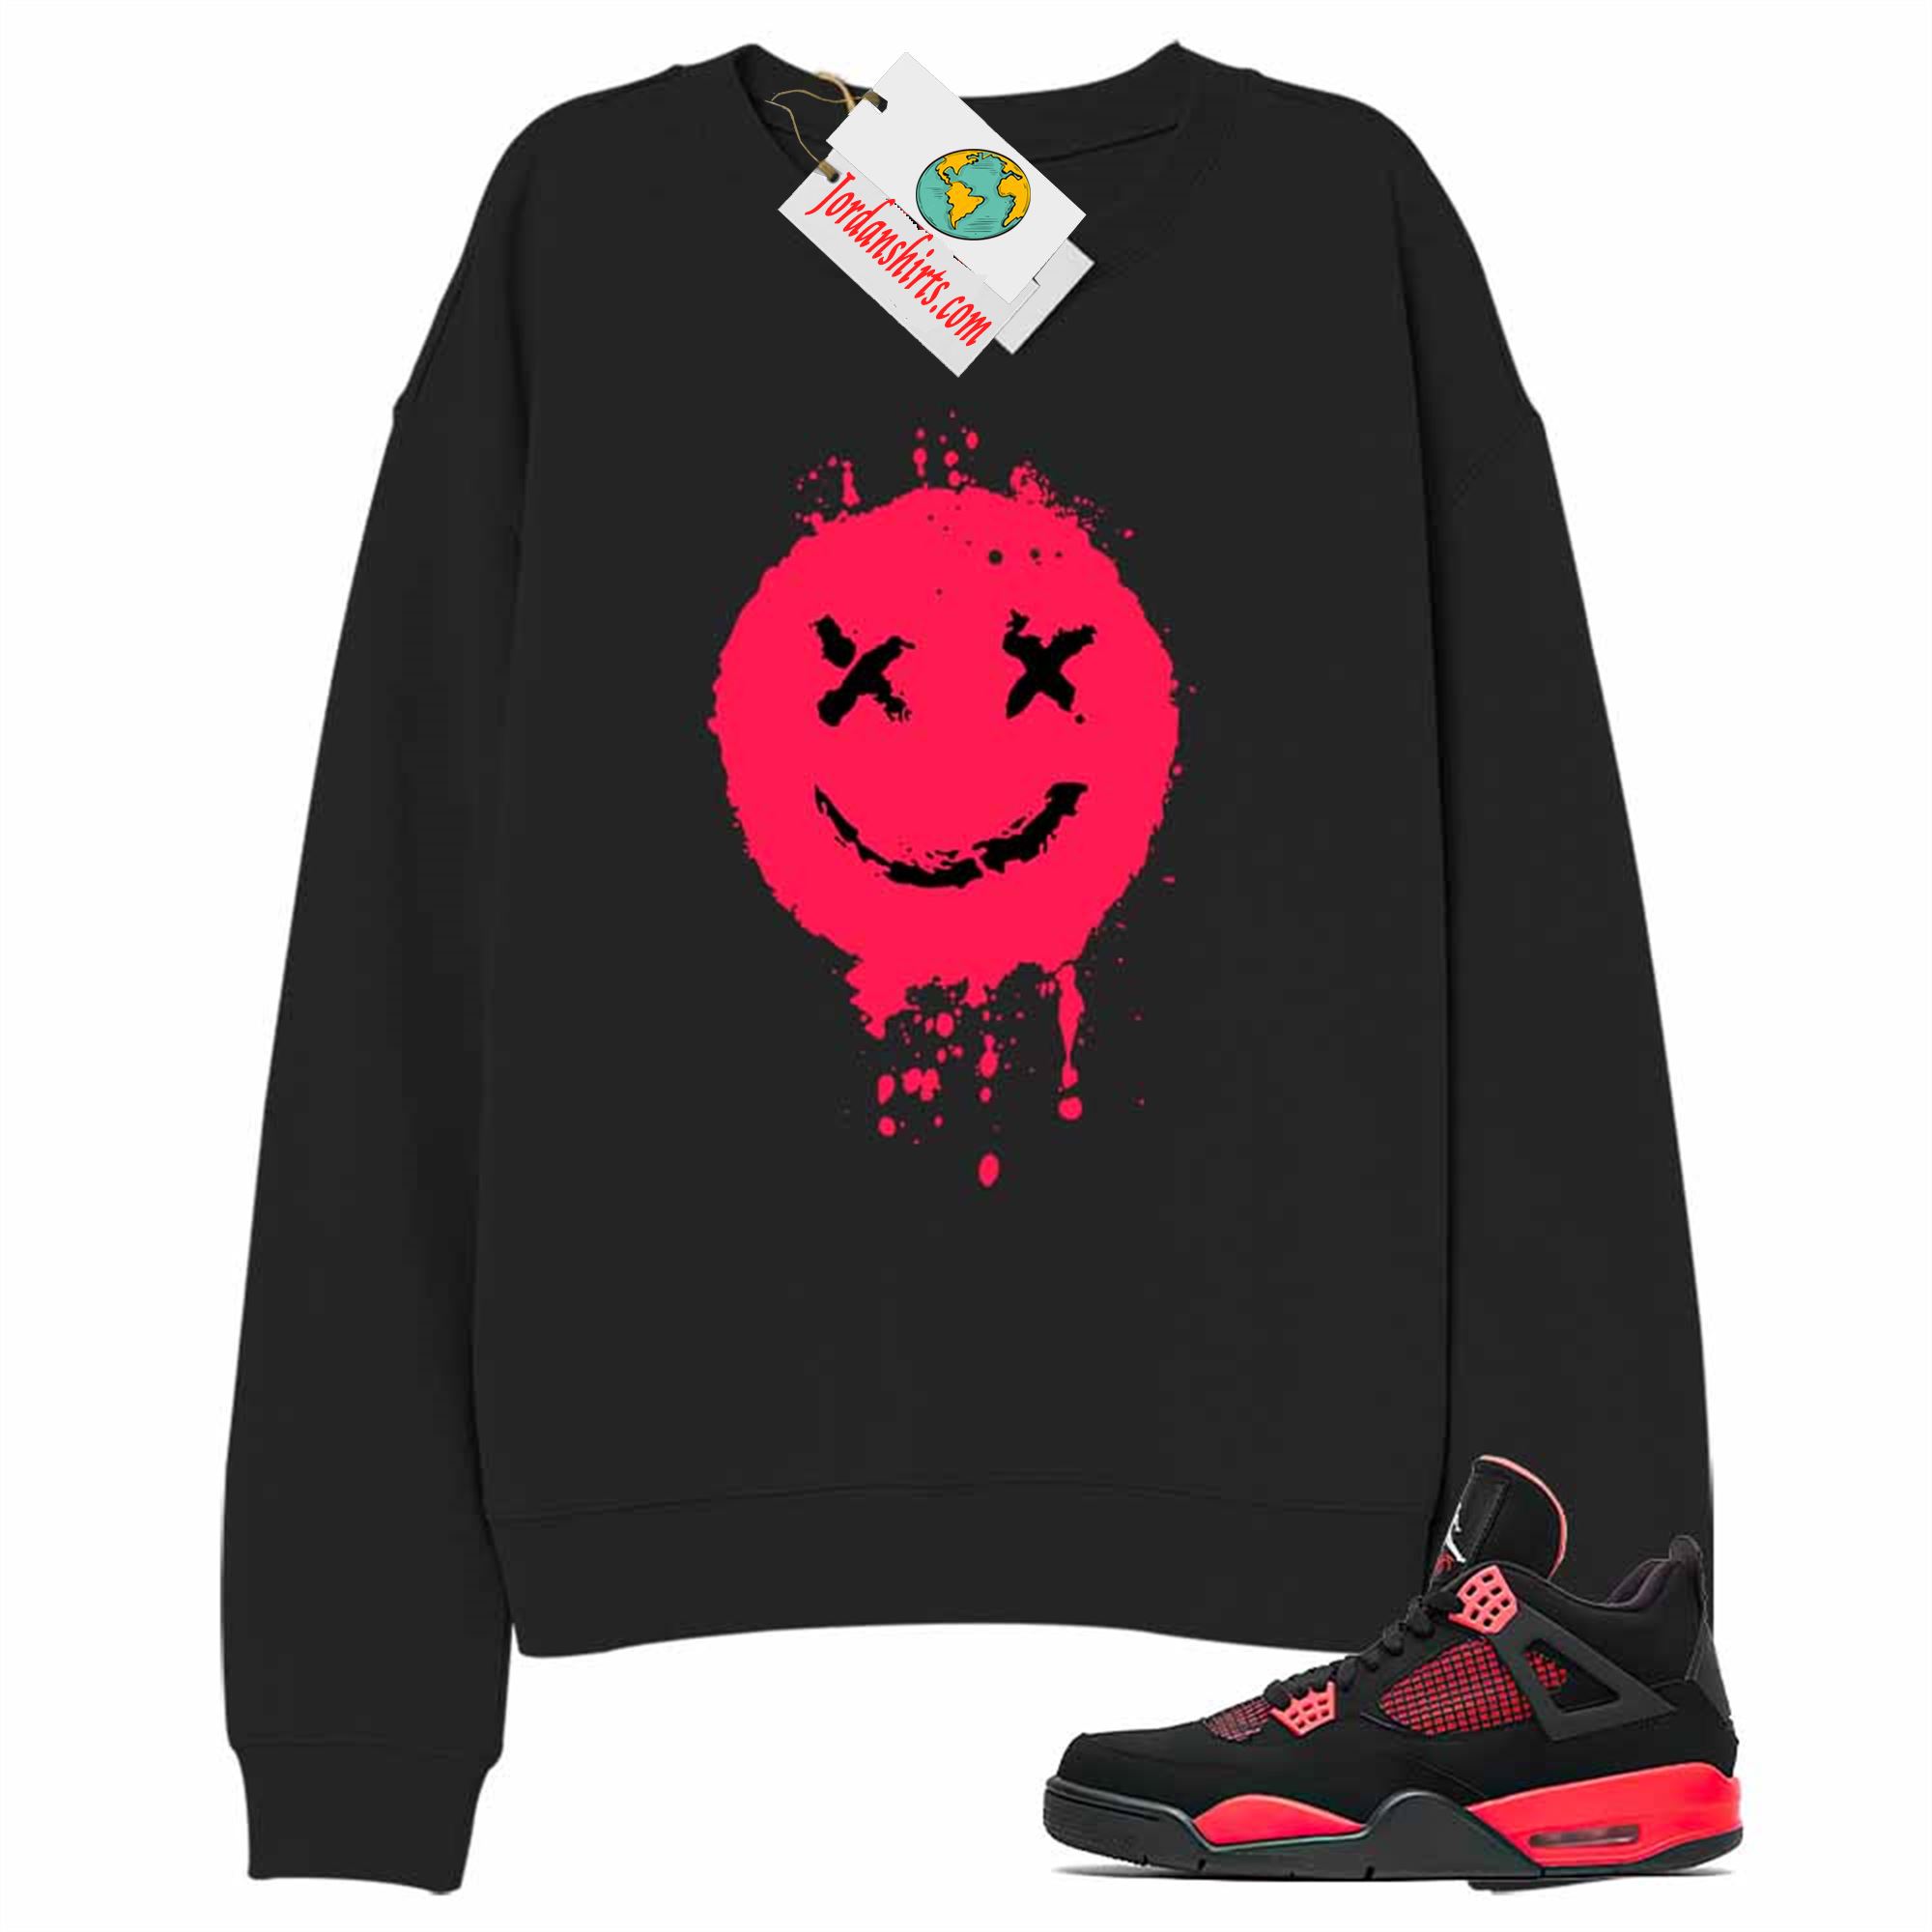 Jordan 4 Sweatshirt, Smile Happy Face Black Sweatshirt Air Jordan 4 Red Thunder 4s Size Up To 5xl